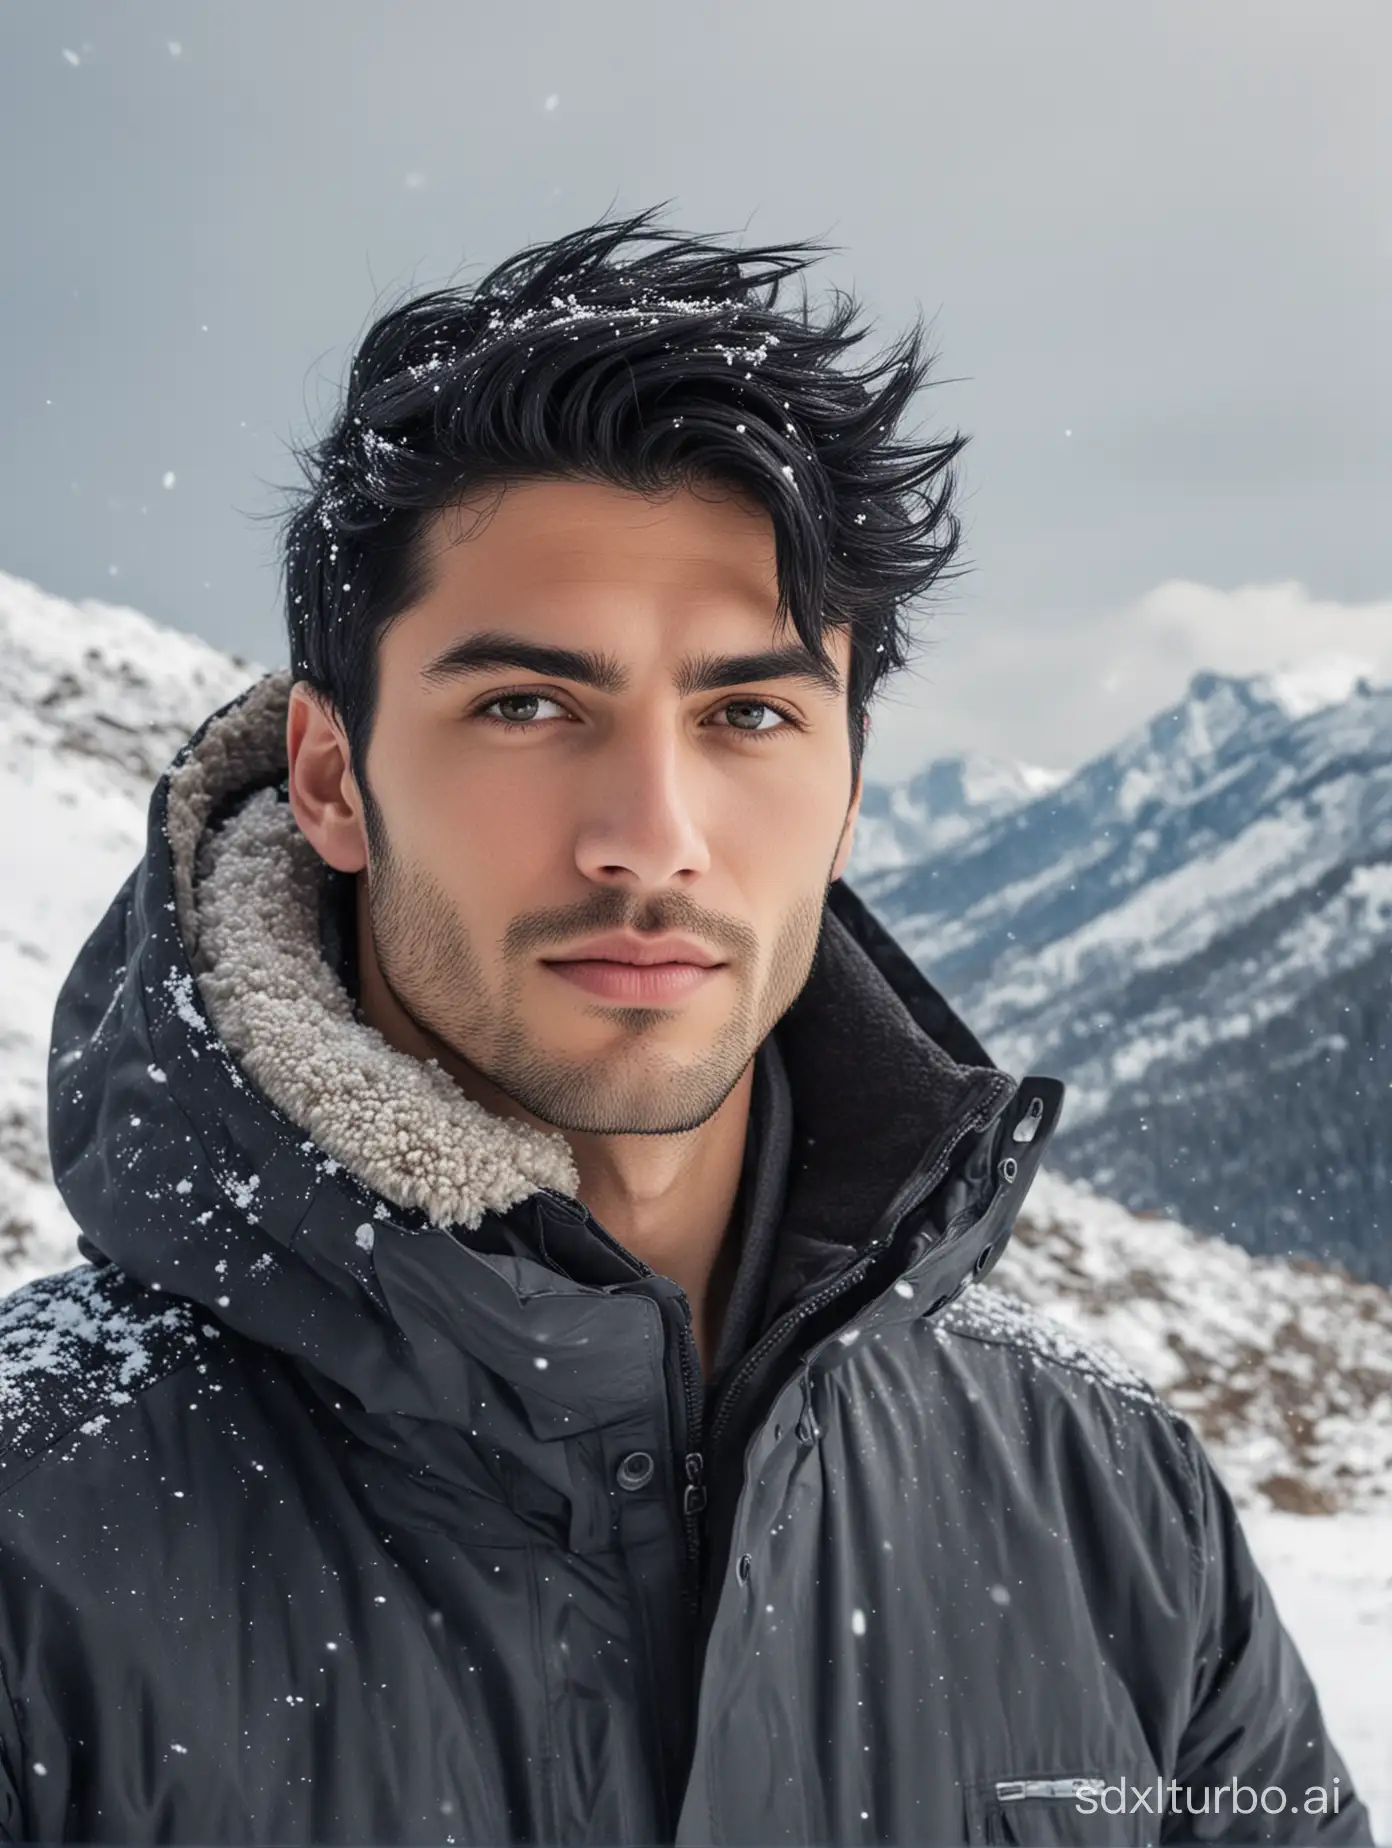 BlackHaired-Man-Fashion-Model-Posing-on-Snowy-Mountain-Peak